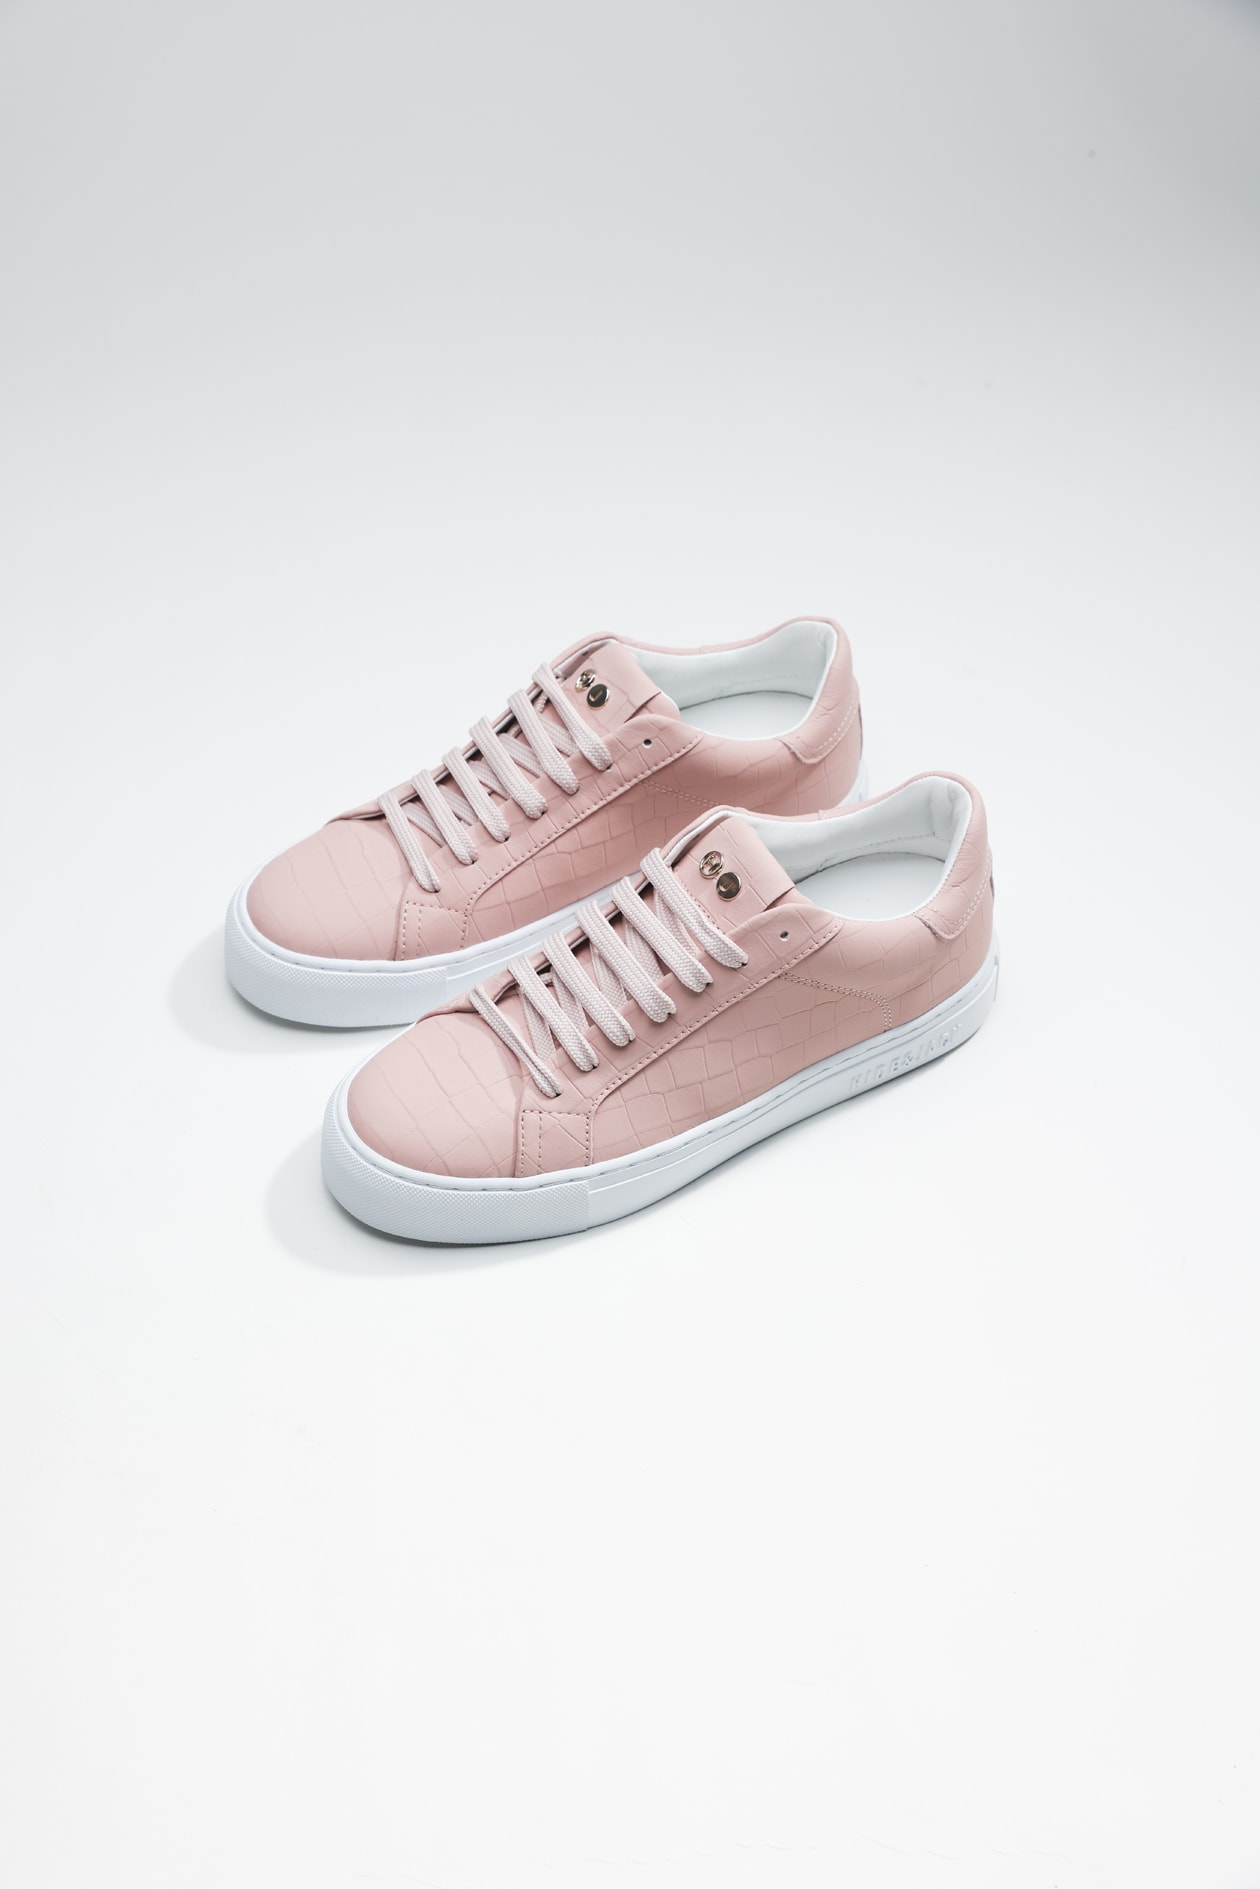 Hide&amp;jack Low Top Sneaker - Essence Pink White